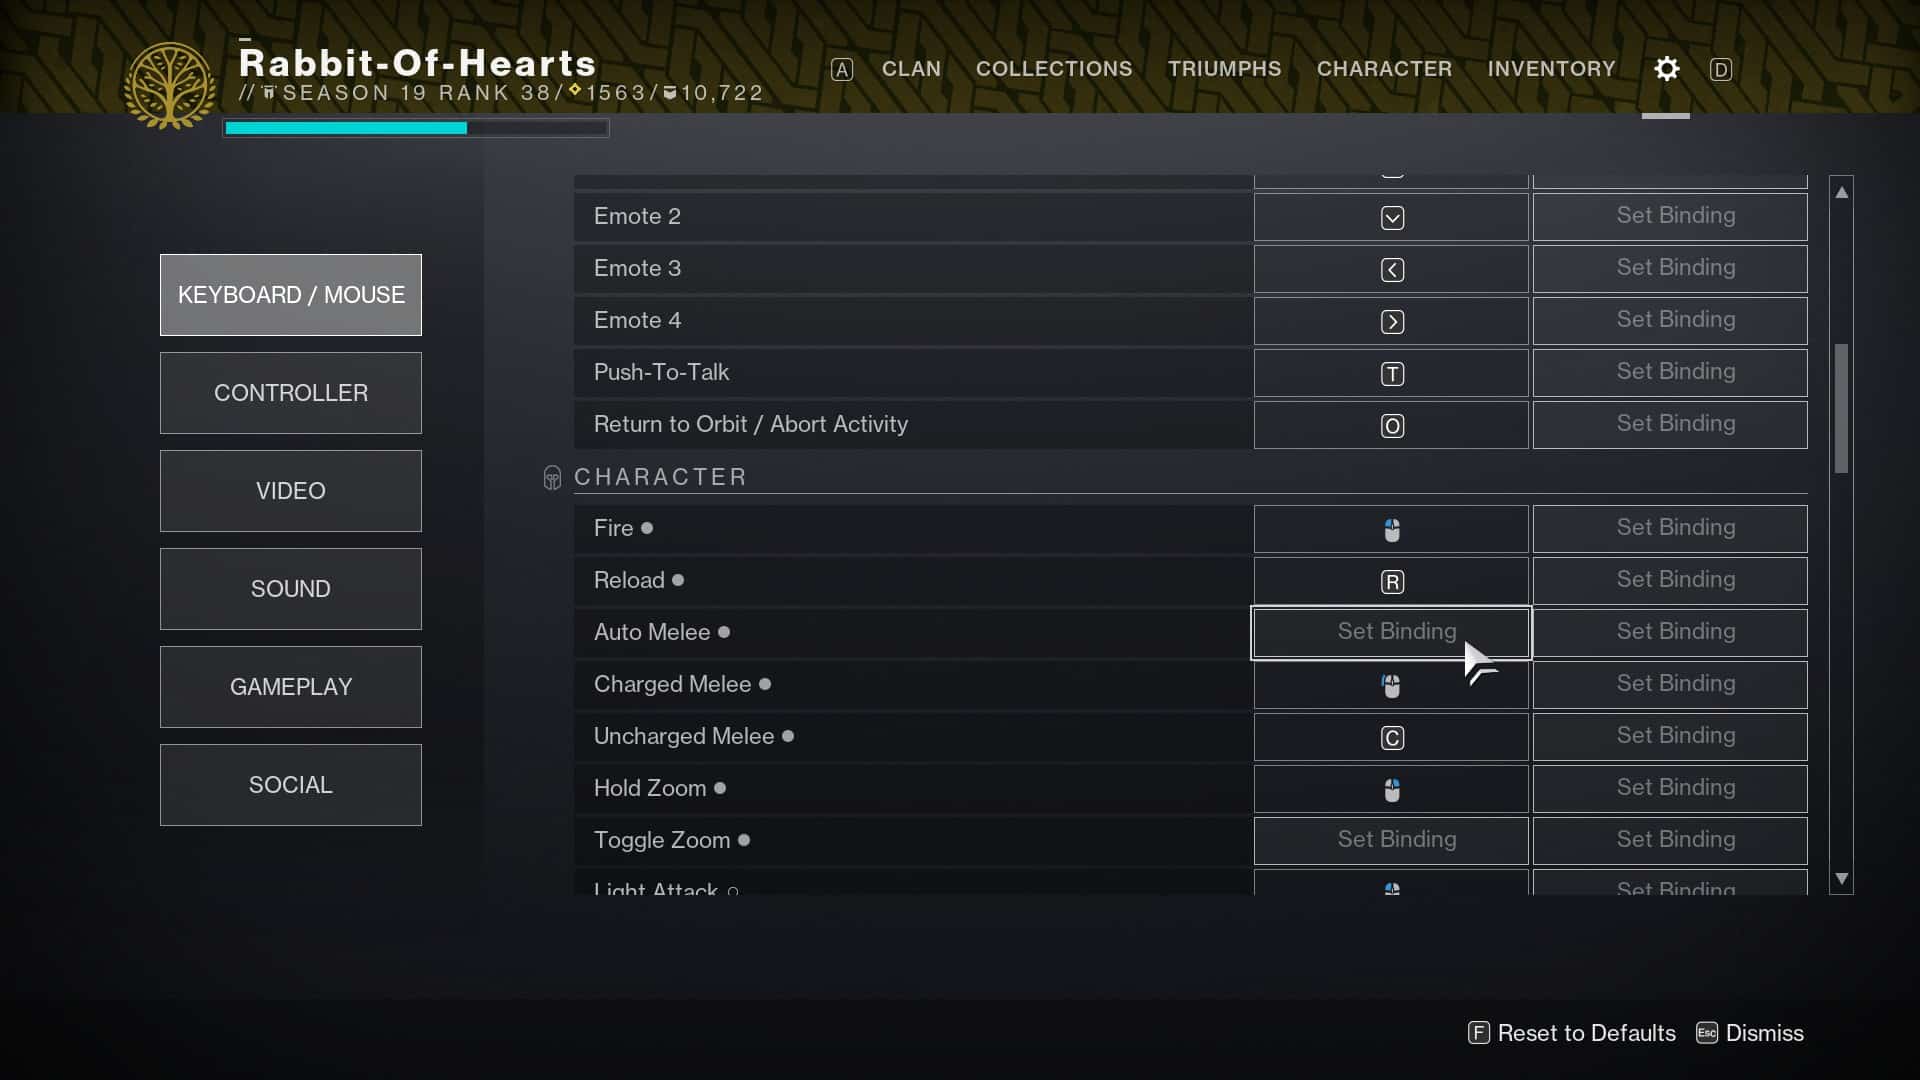 How to unbind keys in Destiny 2 - keybind menu.